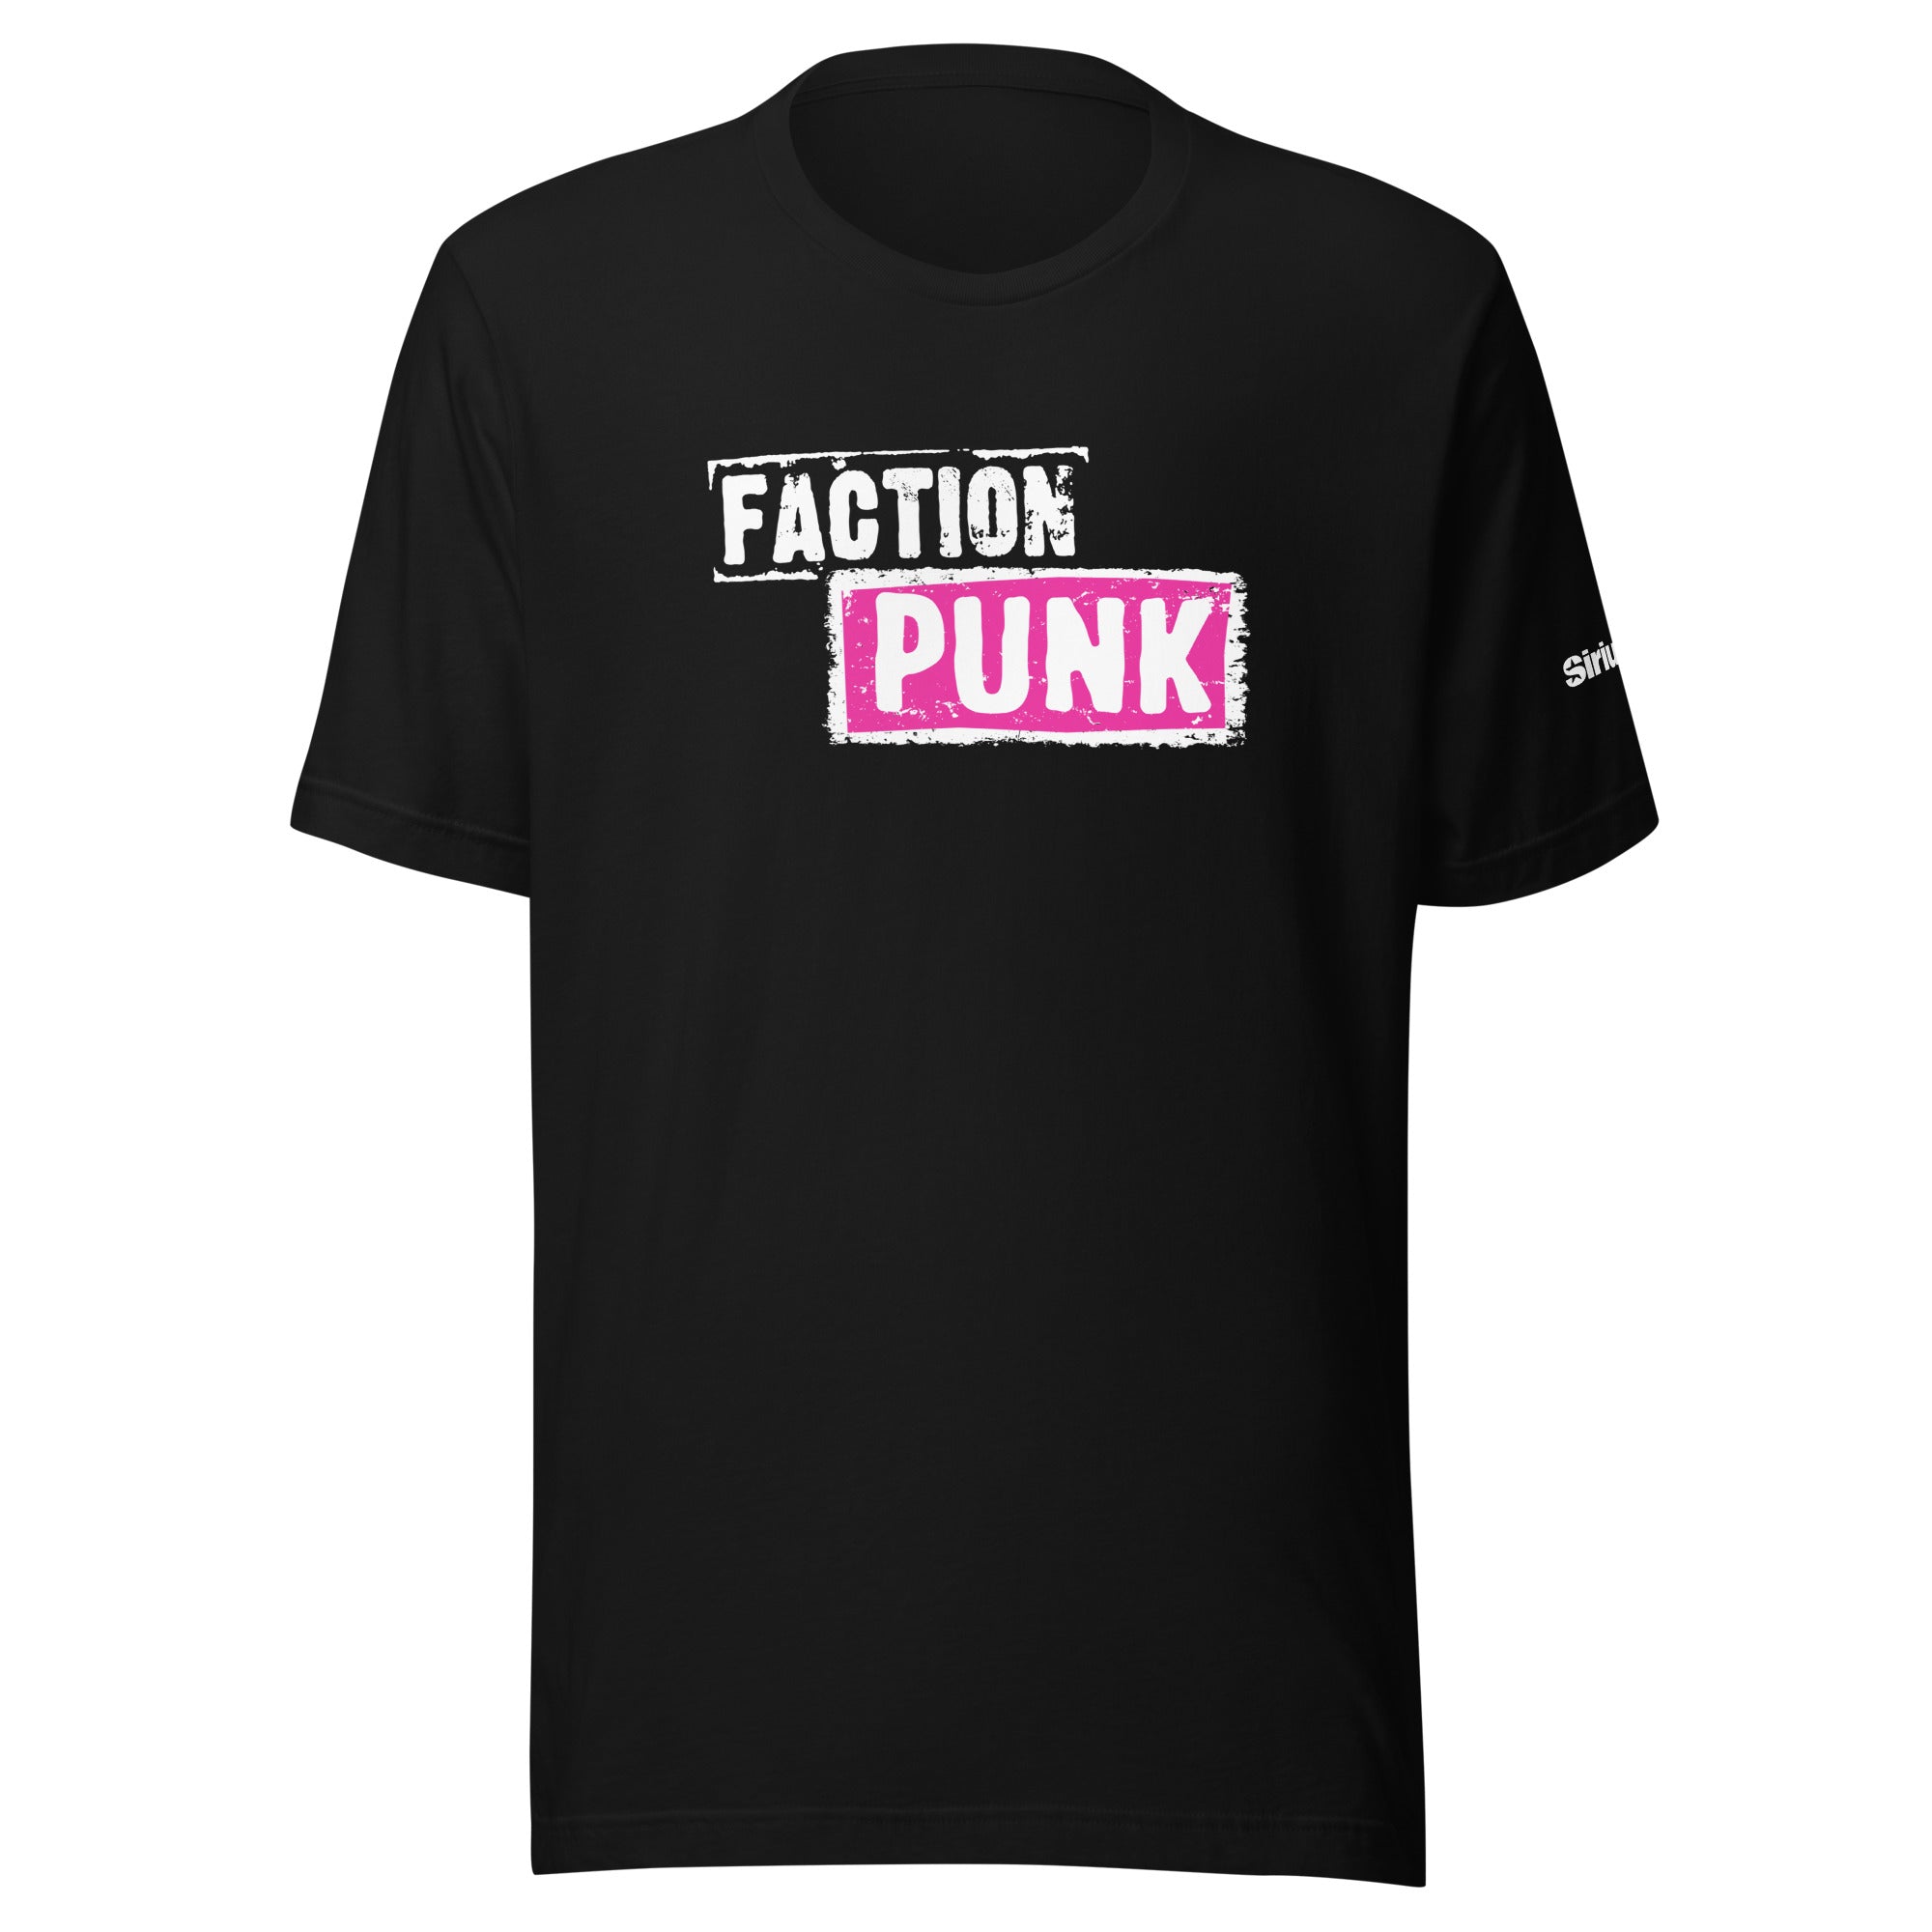 Faction Punk: T-shirt (Black)